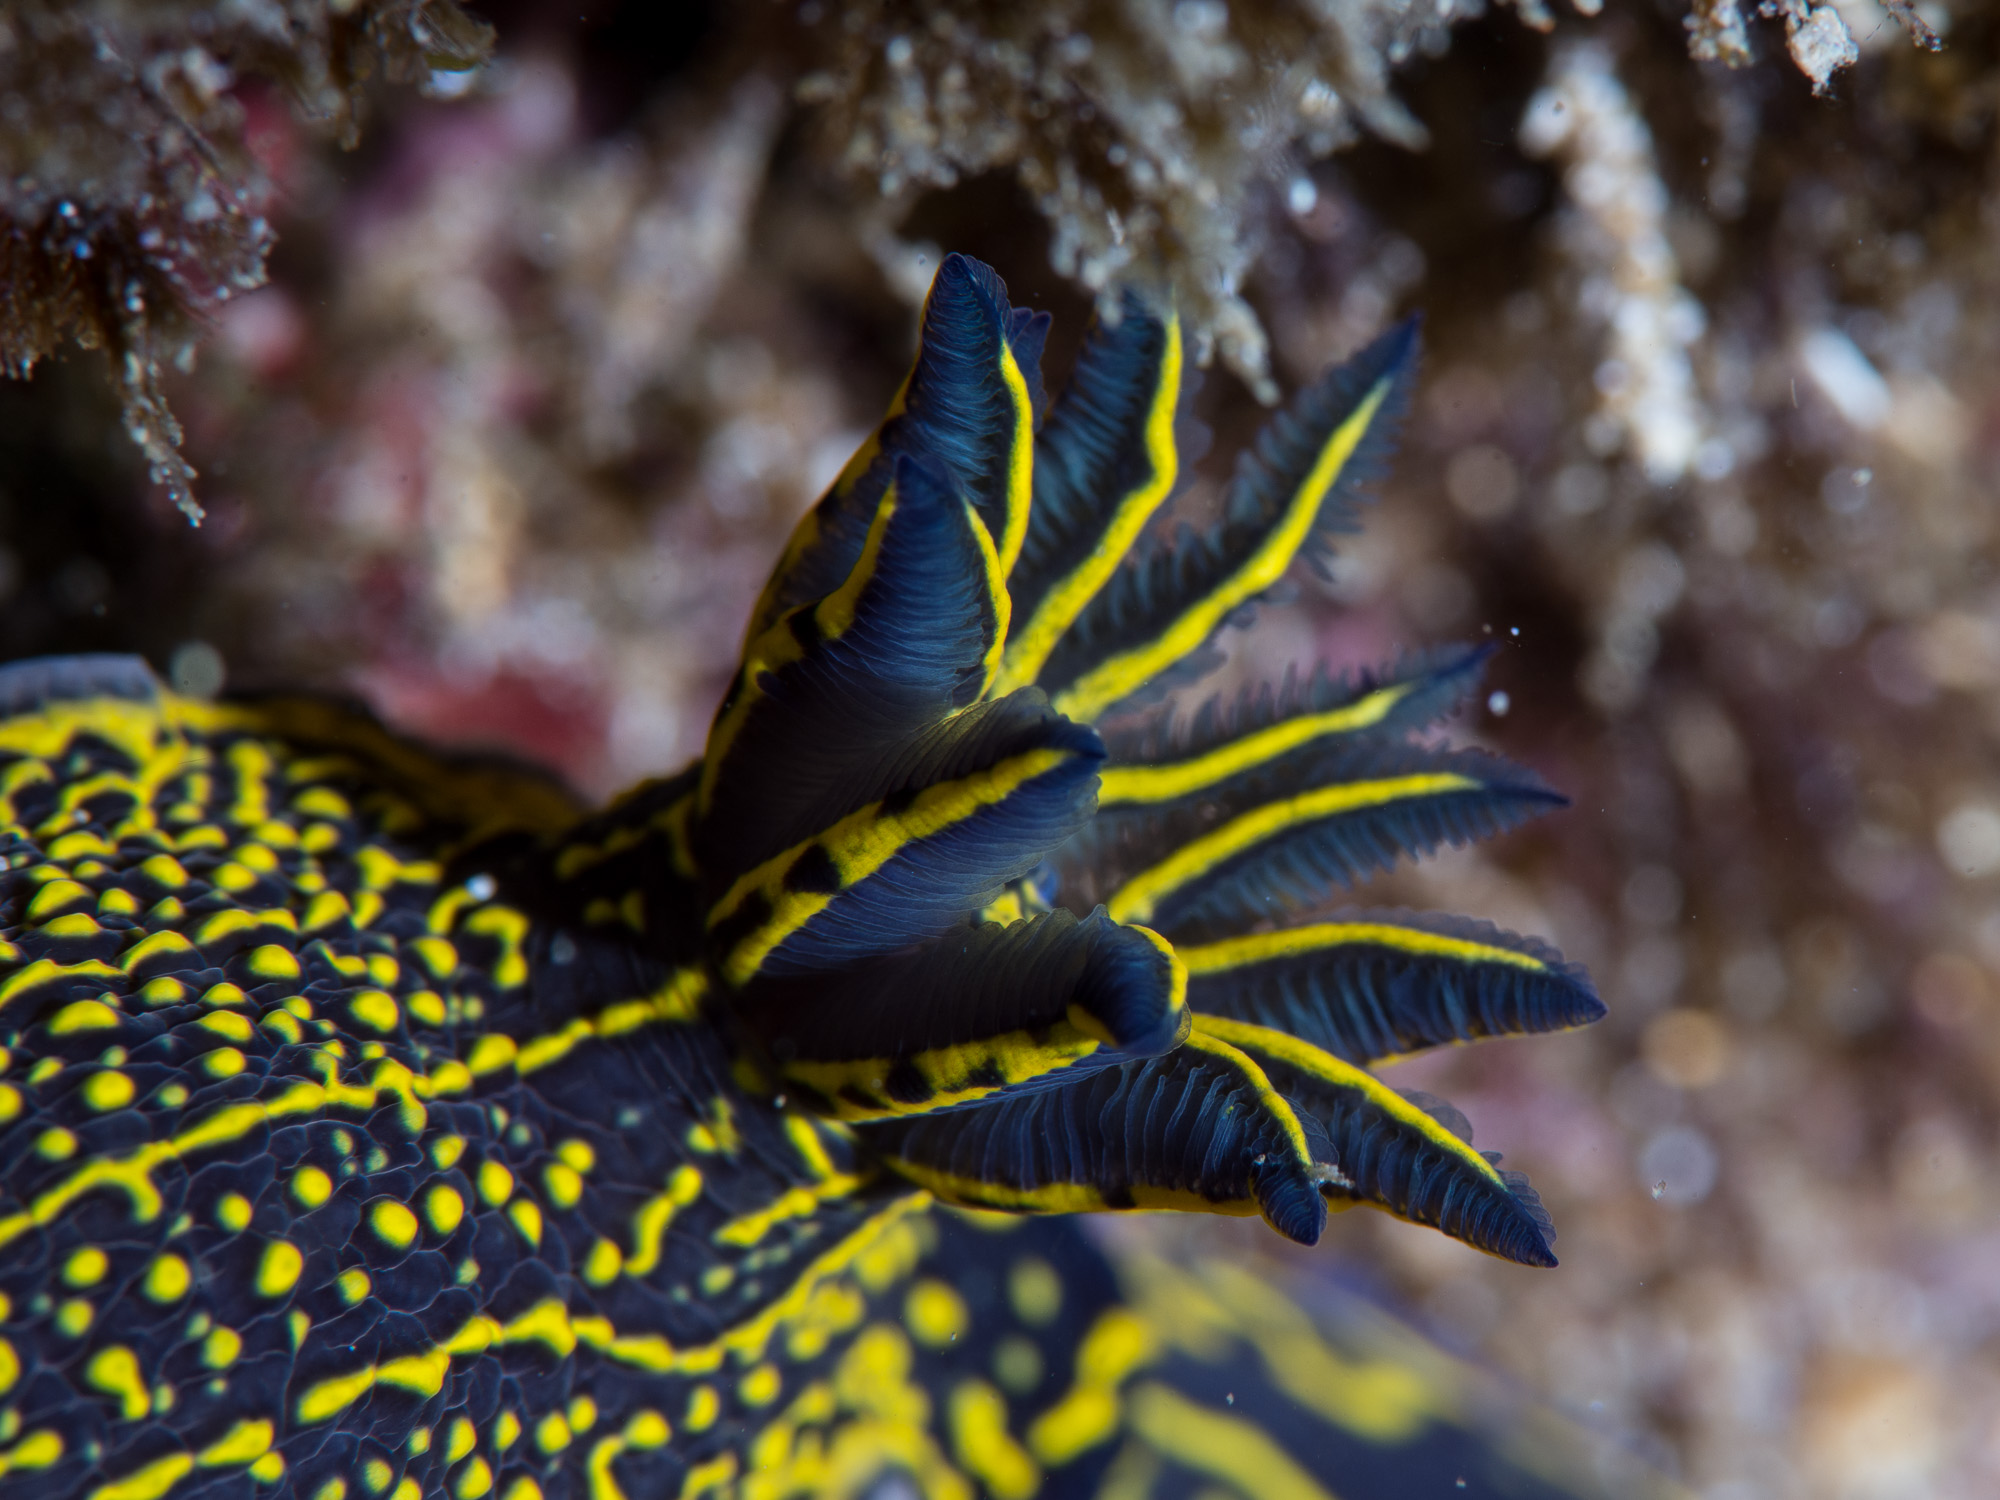 Regal sea goddess nudibranch gills. PC: Bernard Picton